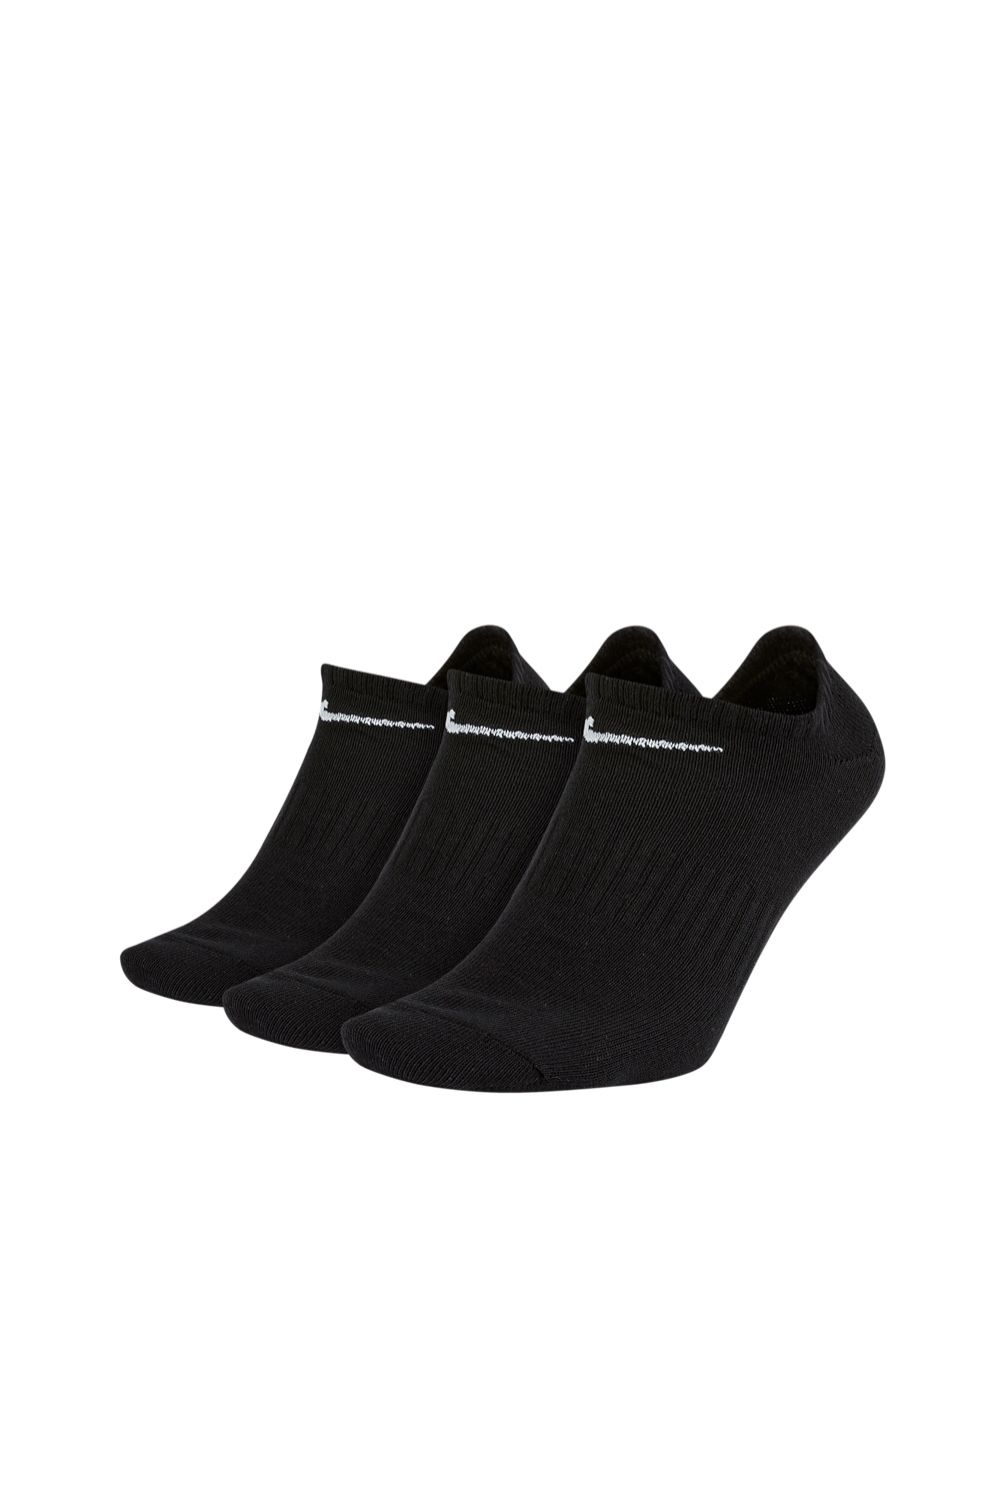 NIKE - Unisex κάλτσες NIKE EVERYDAY LTWT NS μαύρες Γυναικεία/Αξεσουάρ/Κάλτσες